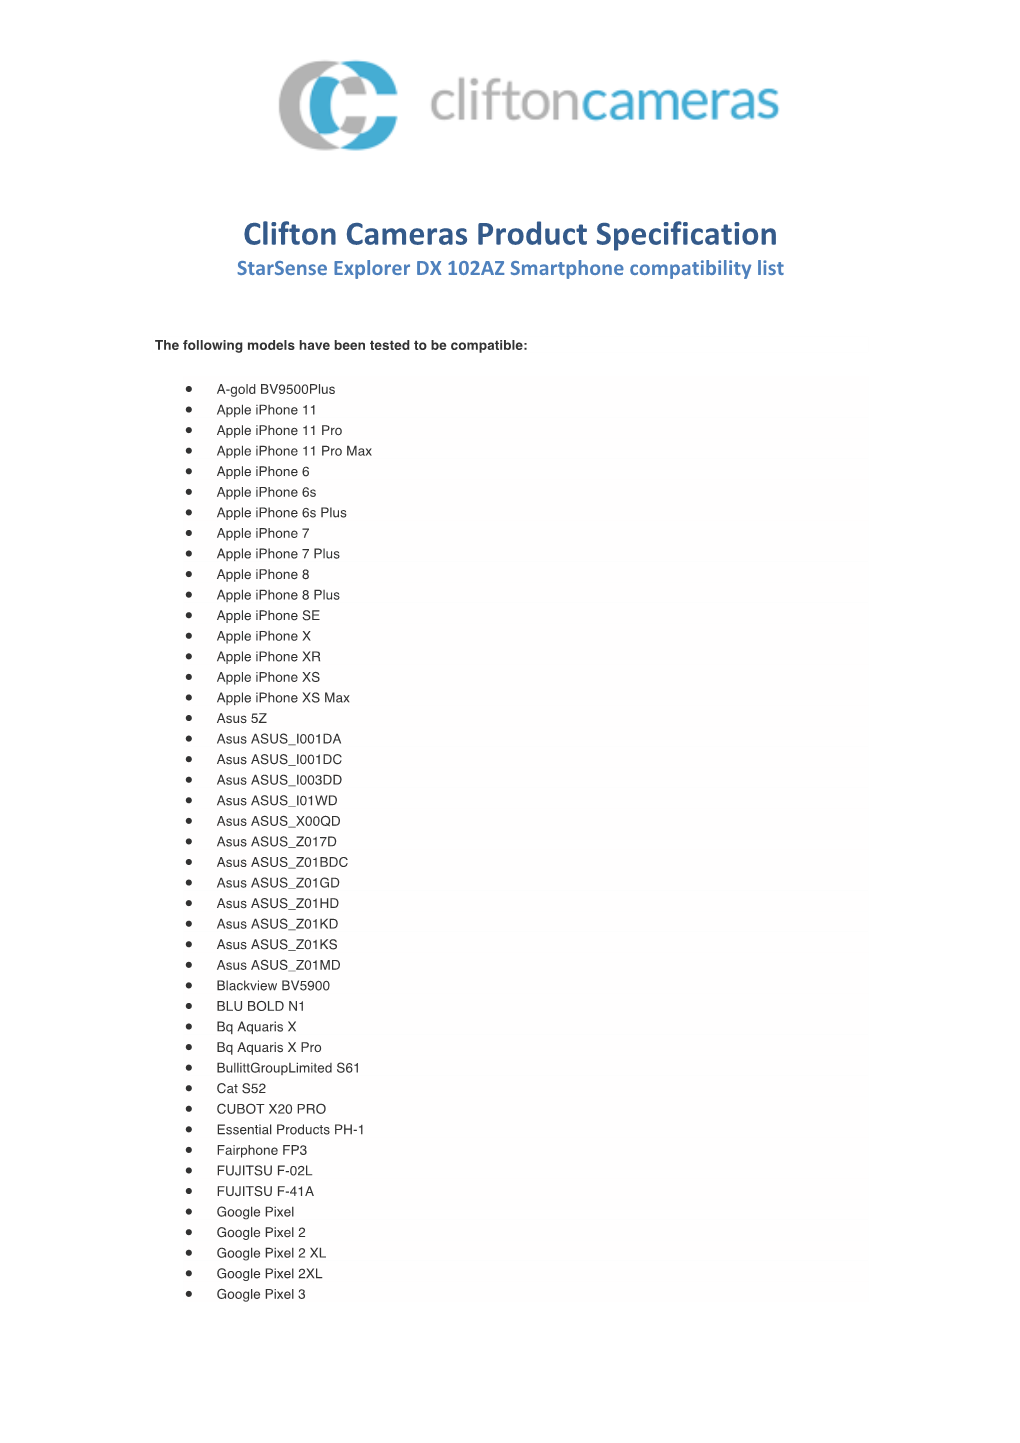 Clifton Cameras Product Specification Starsense Explorer DX 102AZ Smartphone Compatibility List